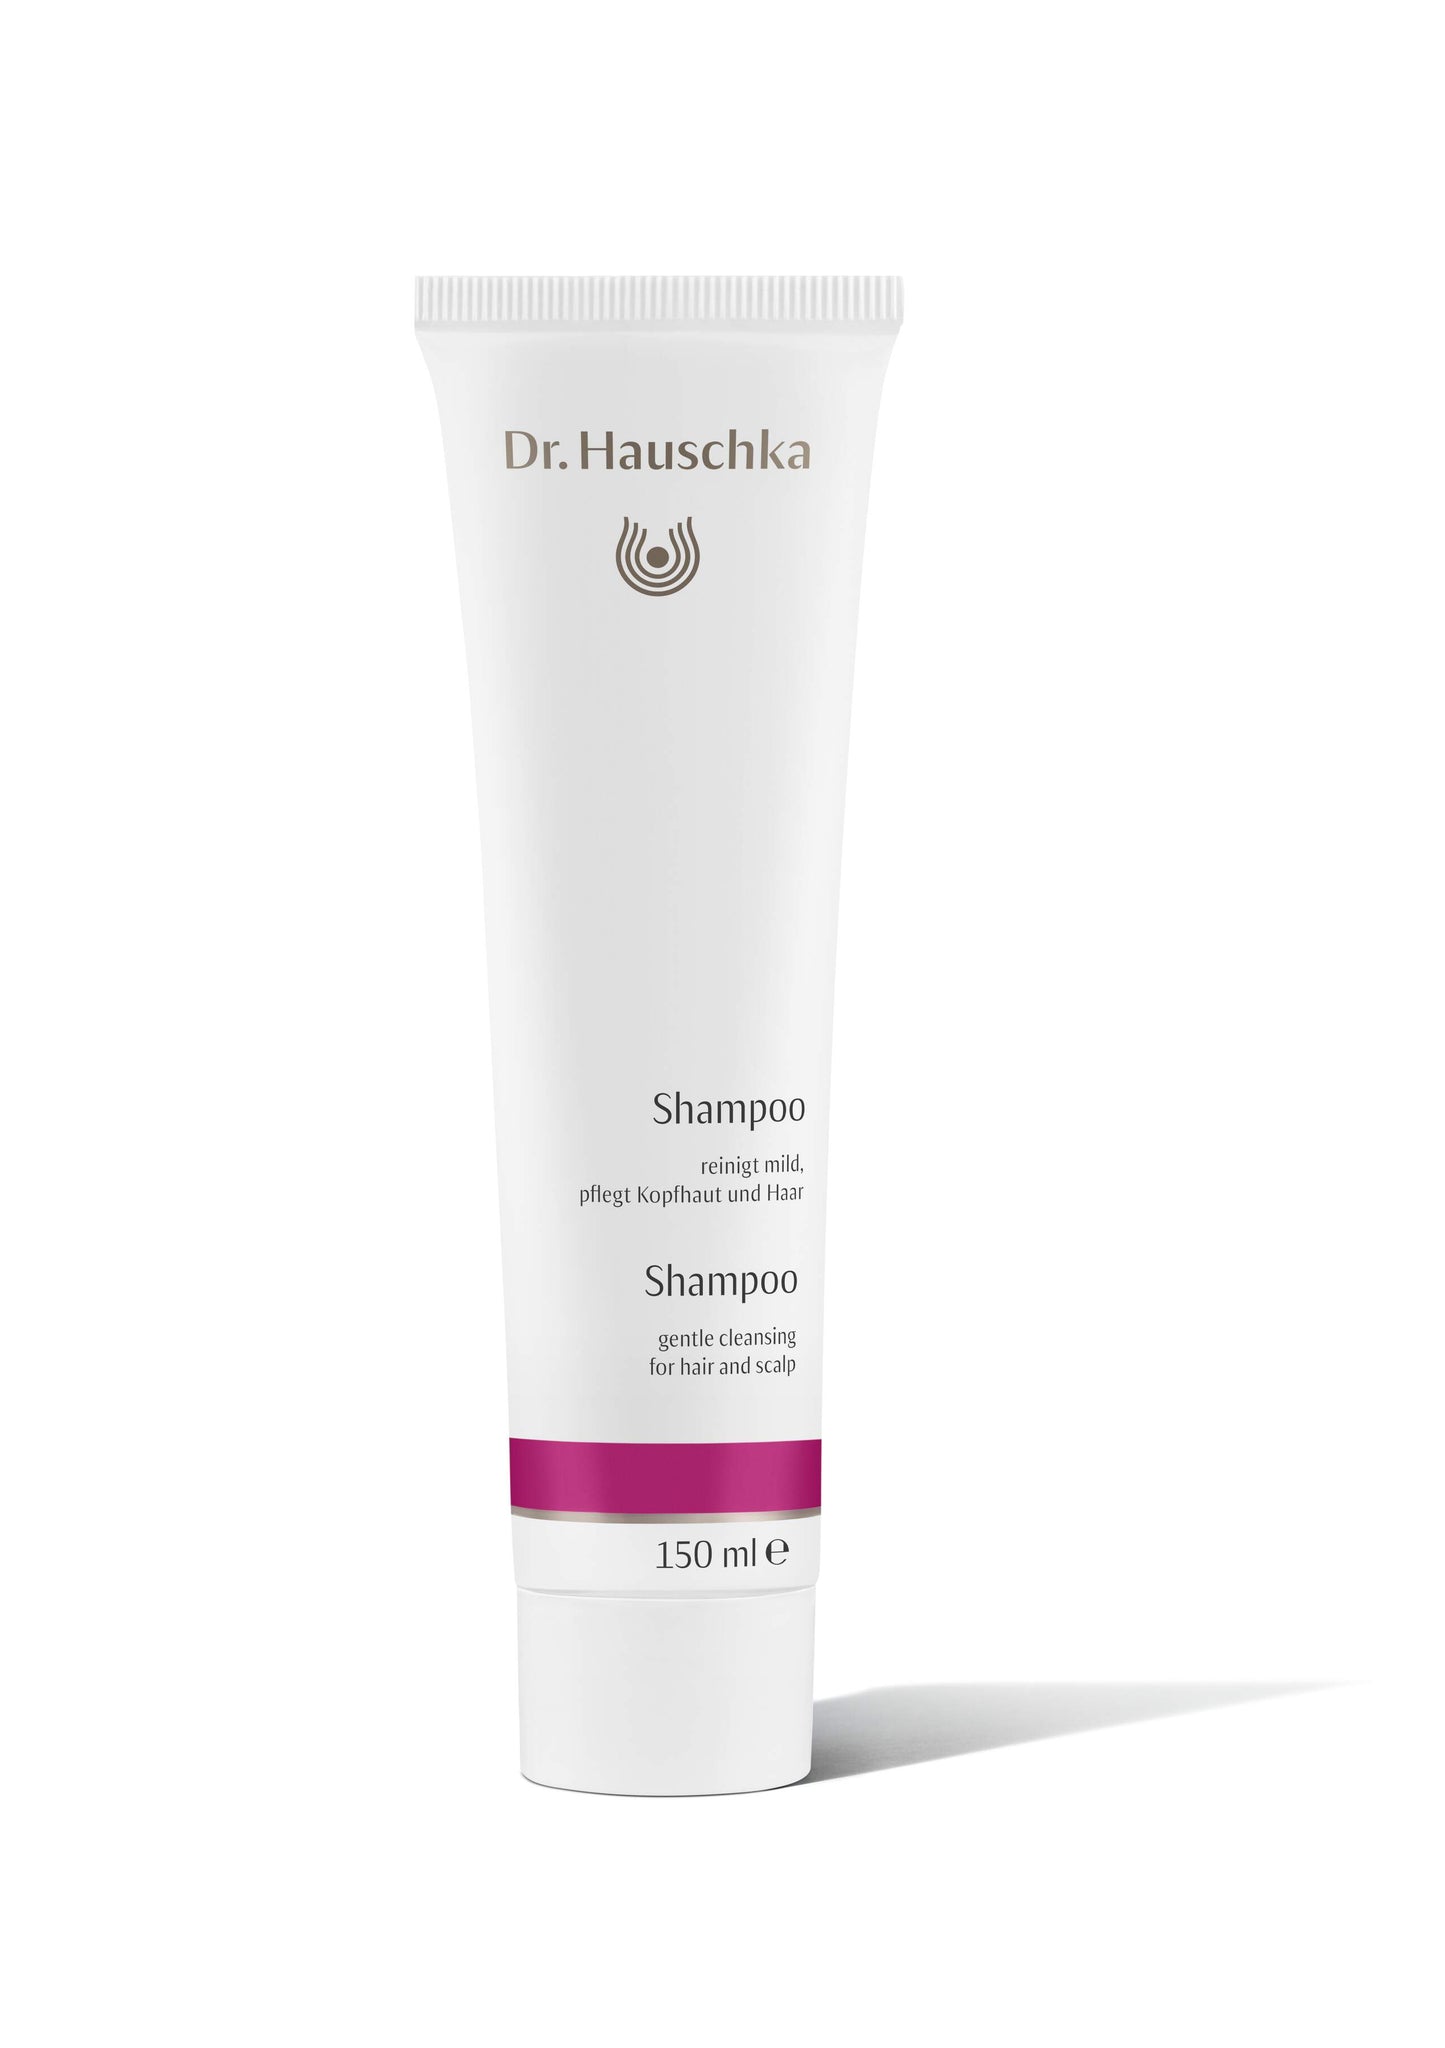 Dr. Hauschka - Shampoo 150ml